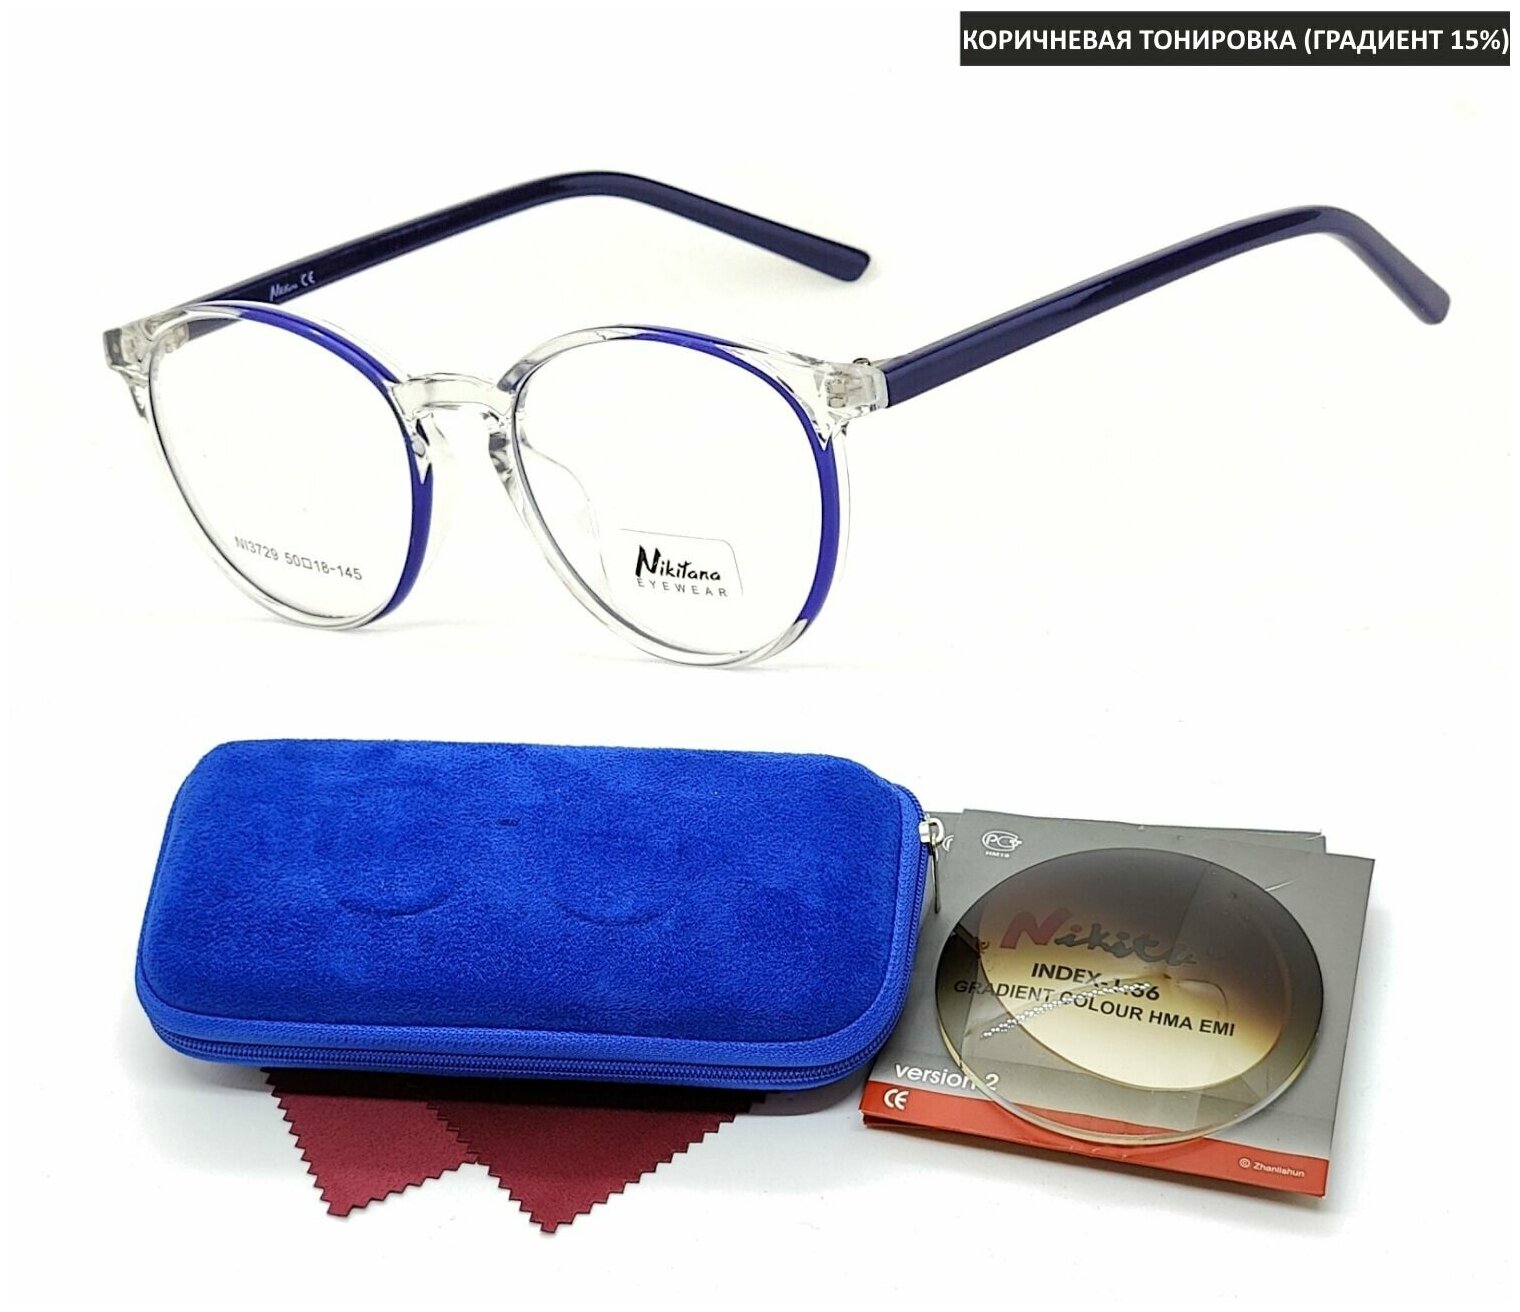 Тонированные очки с футляром-змейка NIKITANA мод. 3729 Цвет 4 с линзами NIKITA 1.56 GRADIENT BROWN, HMA/EMI -3.75 РЦ 60-62